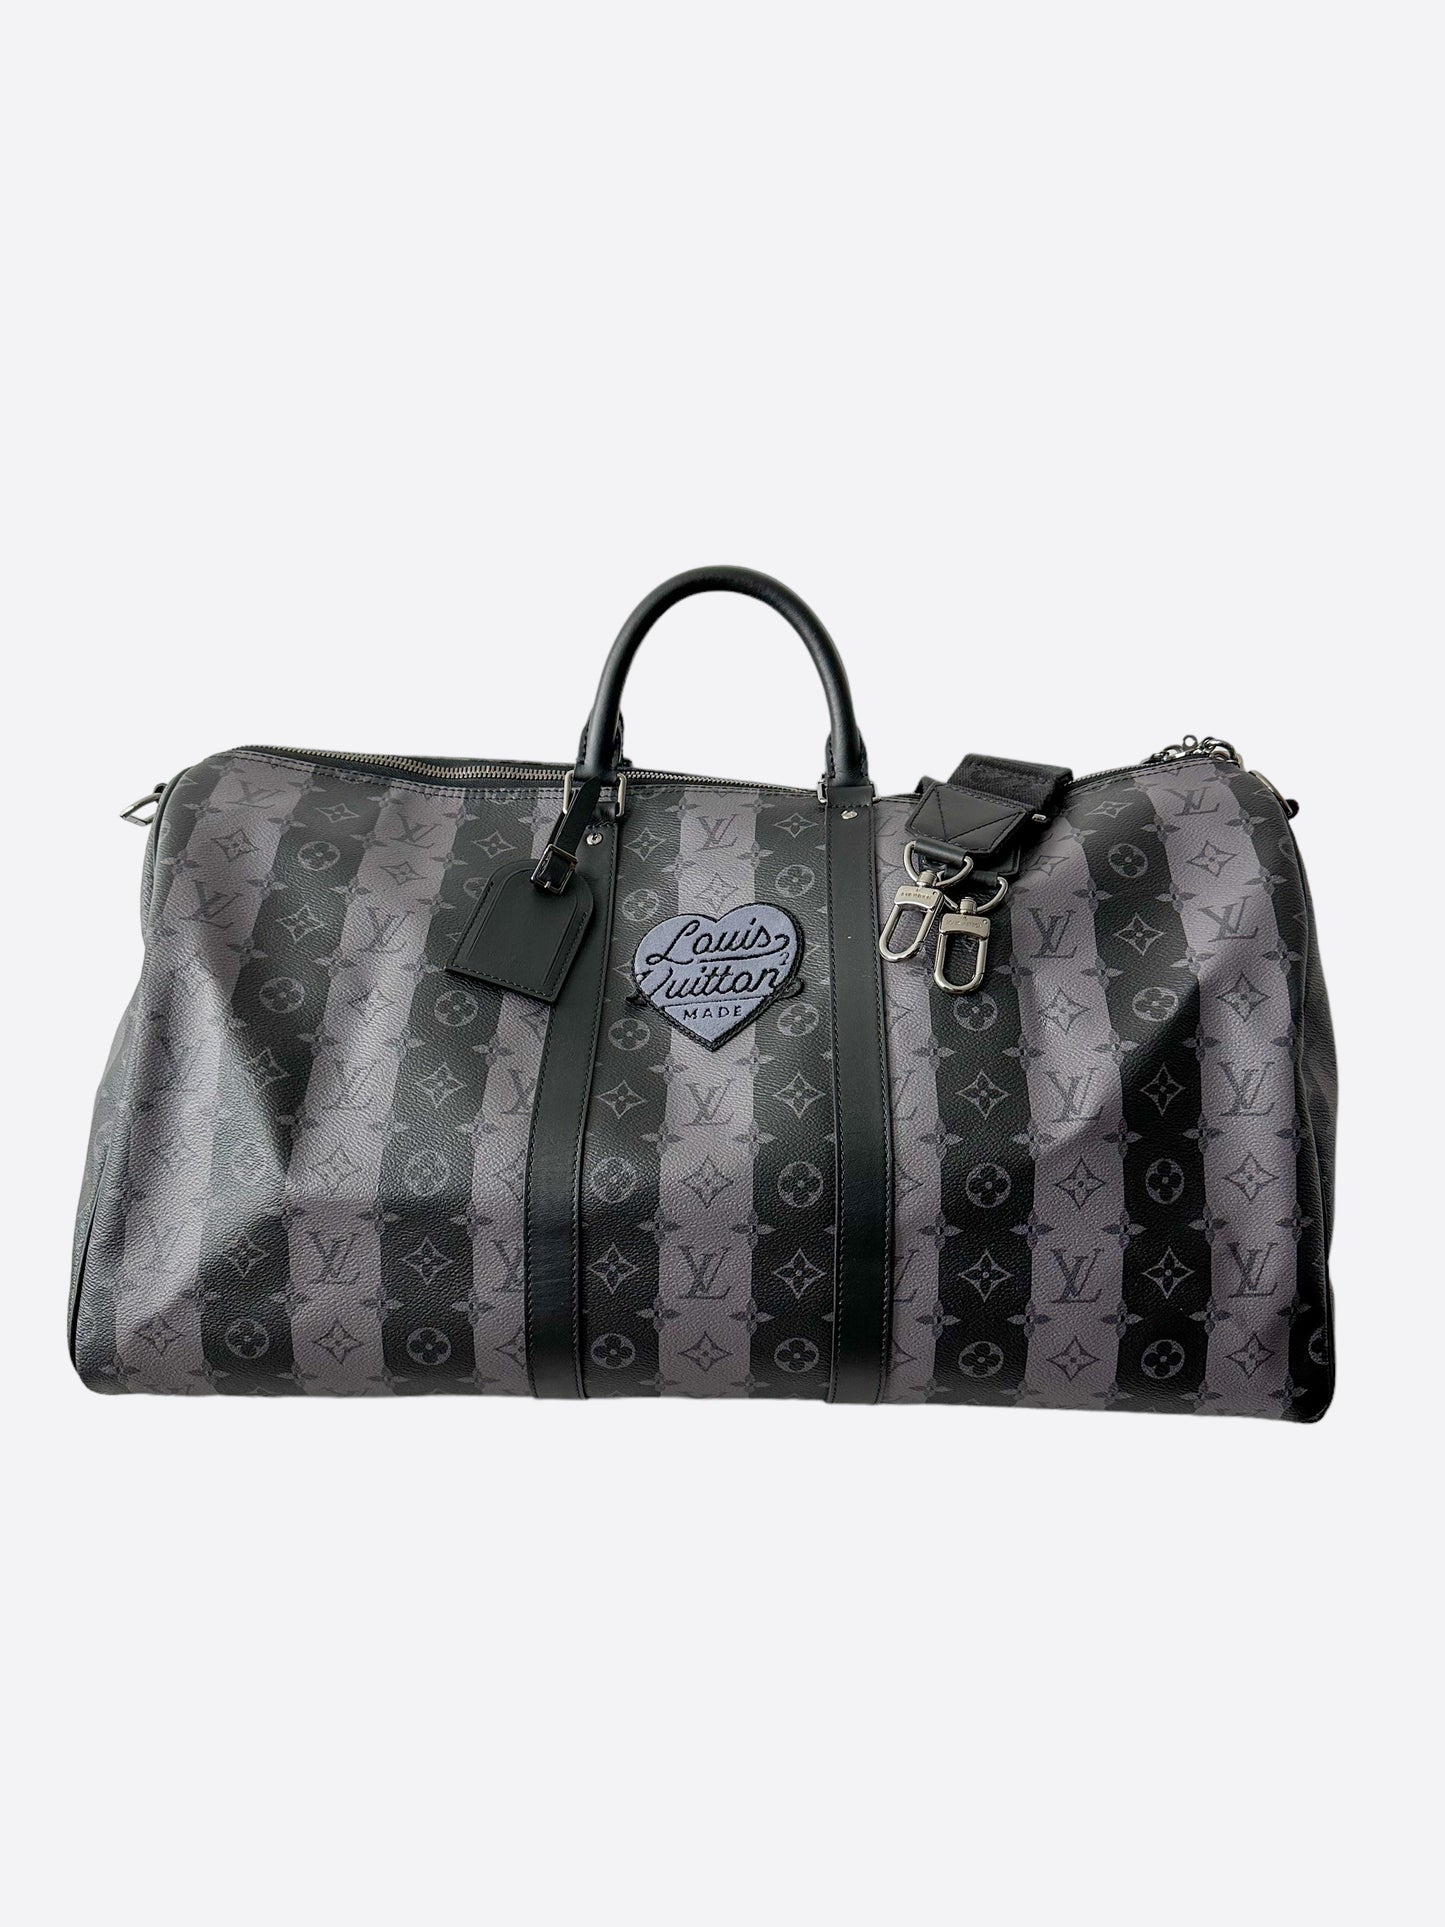 lv duffle bag black and grey